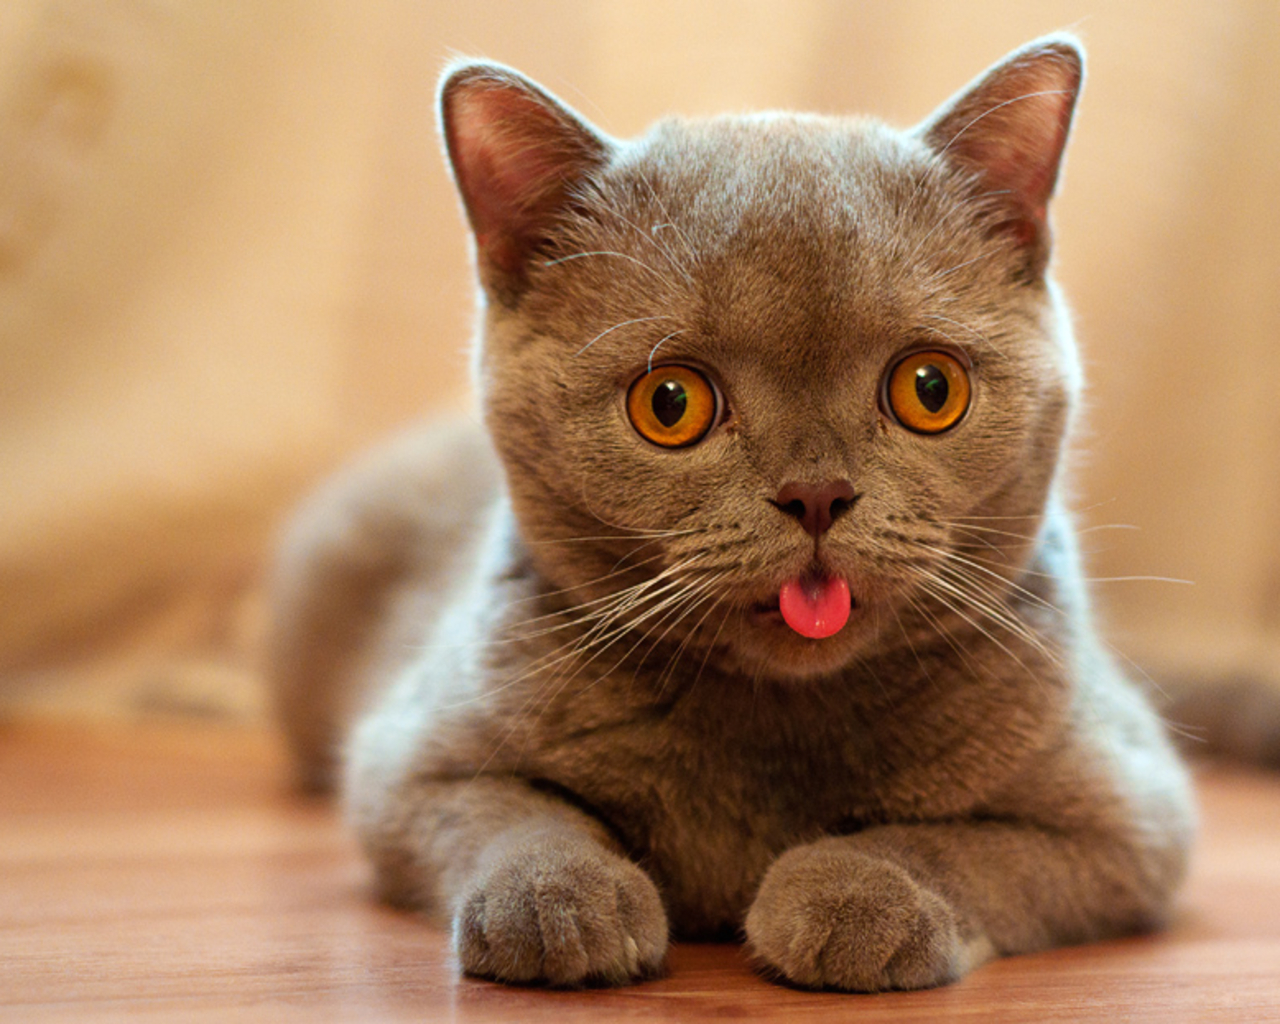 Cute kitty tongue